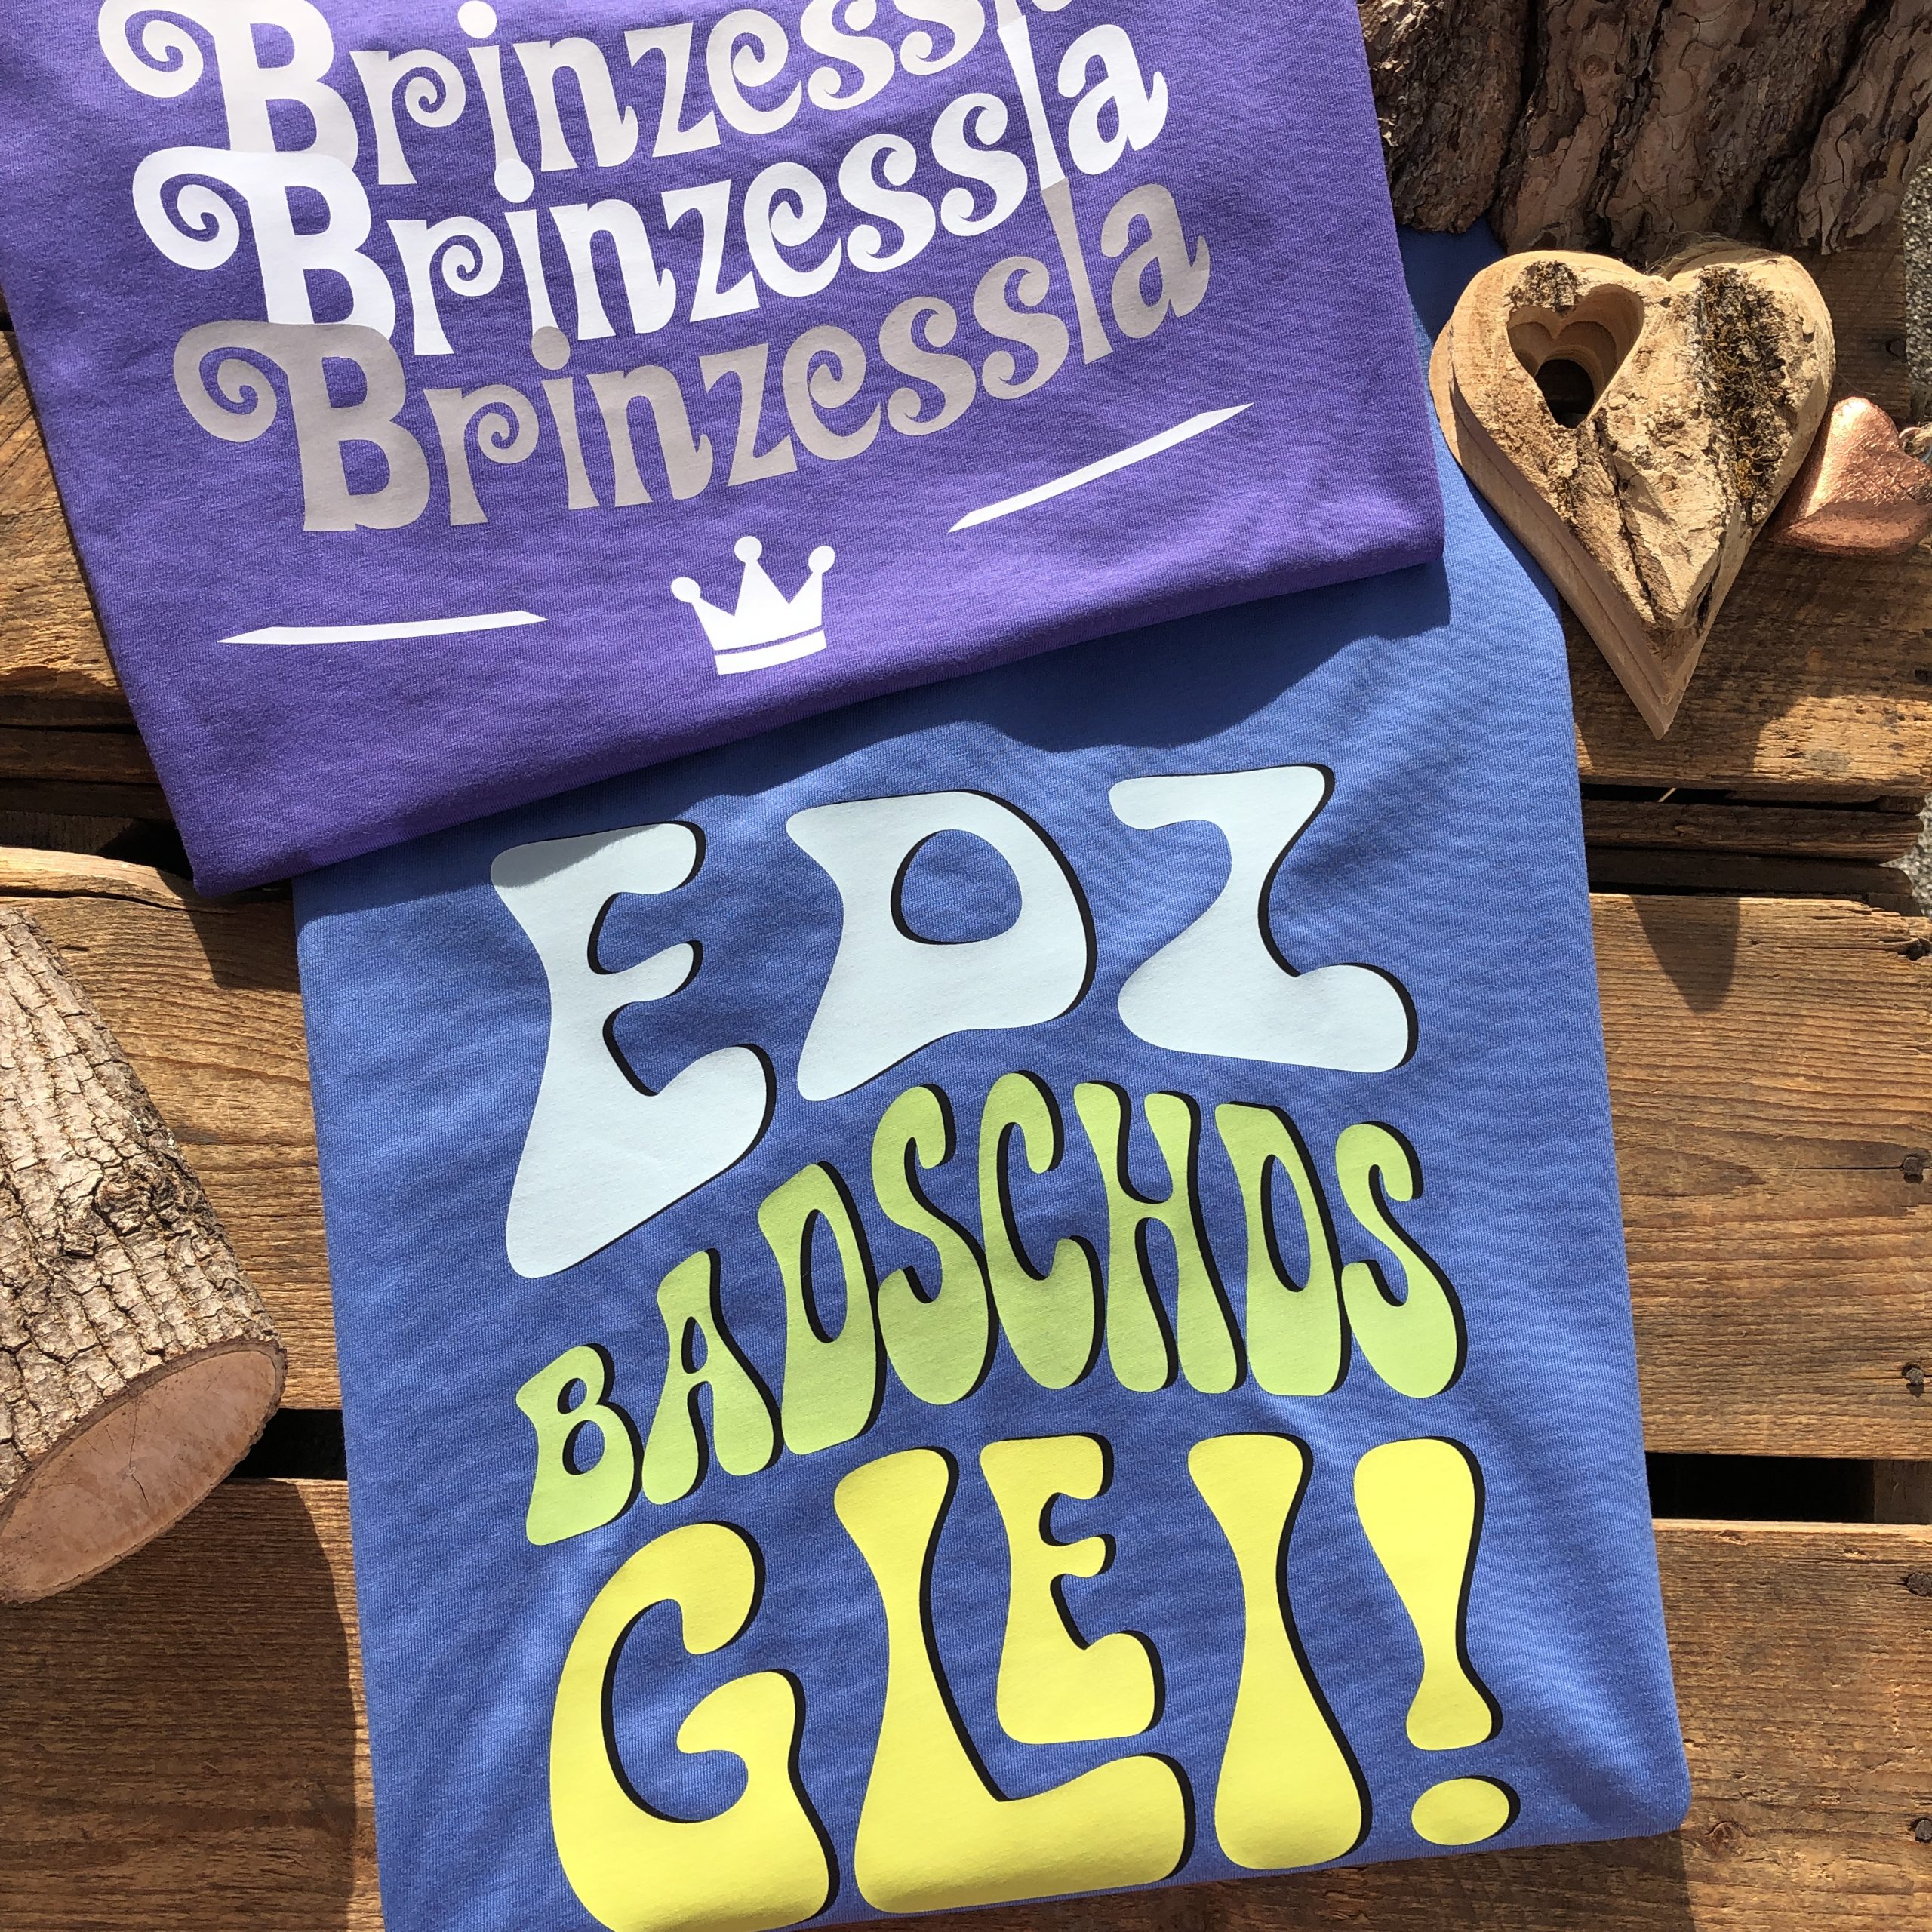 Edz Badschds Glei T-Shirt Franken